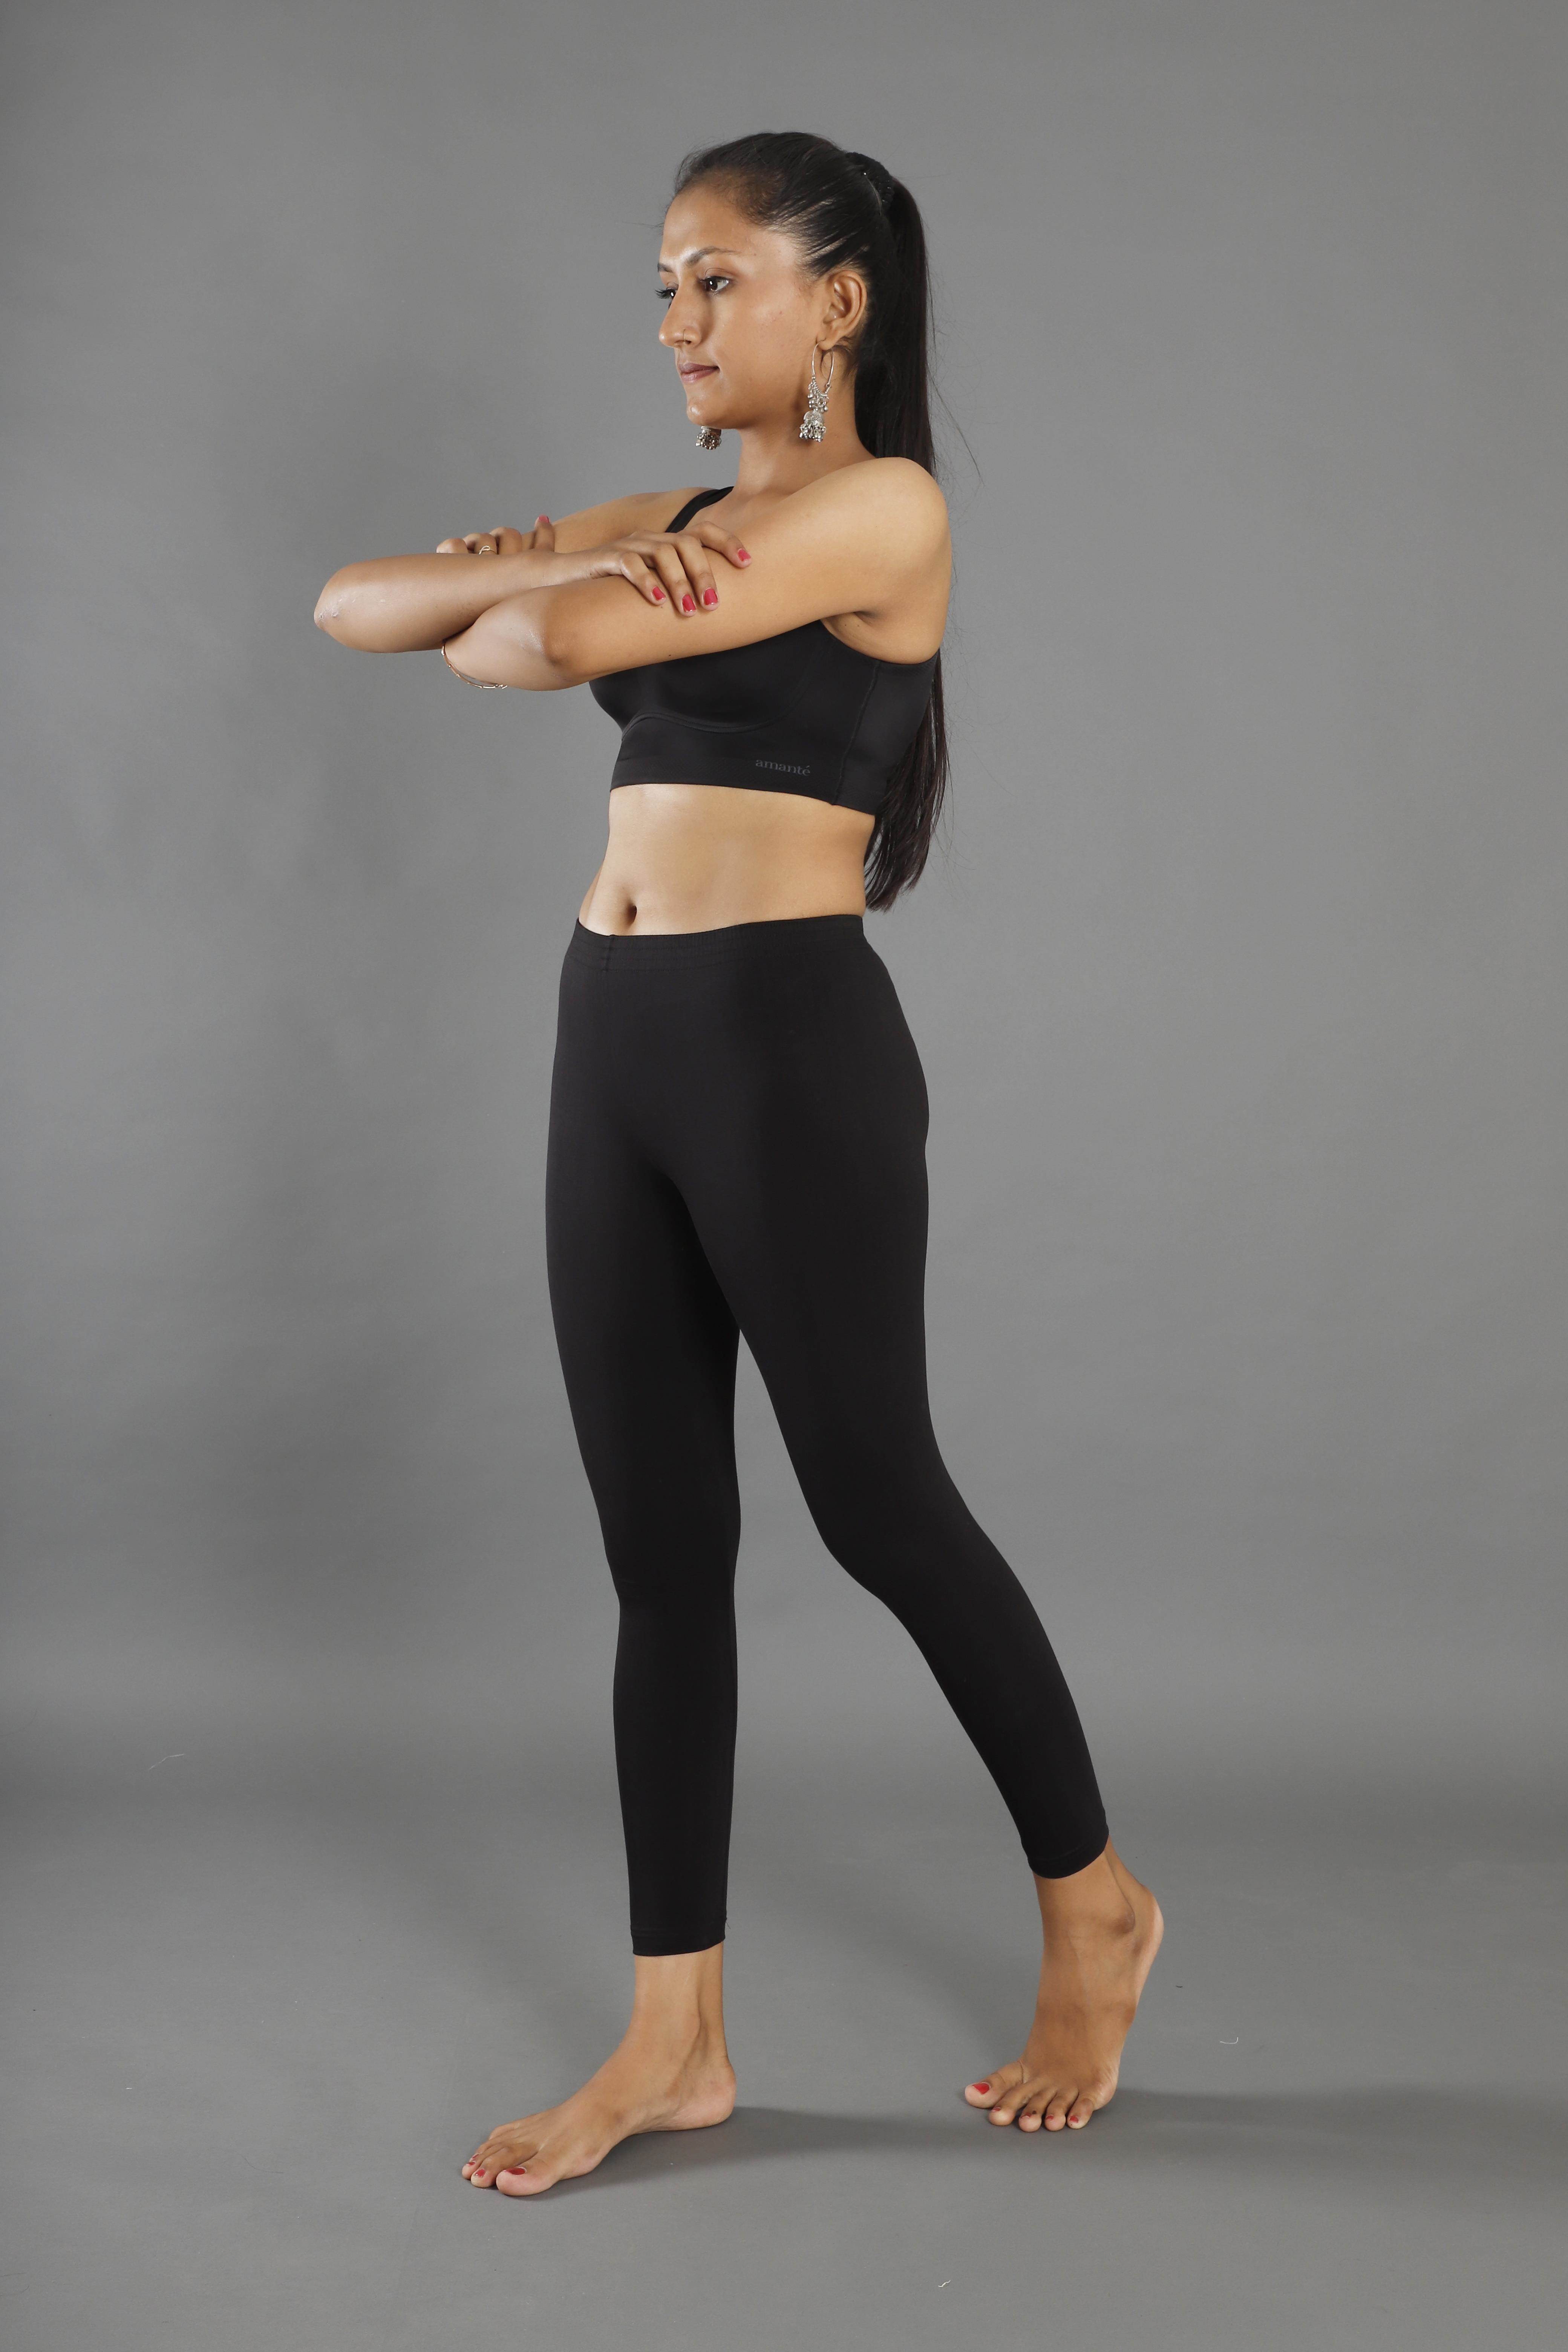 Black Yoga Set For Women W/ Sports Bra & Fitted Mesh Cropped Yoga Pants |  eBay